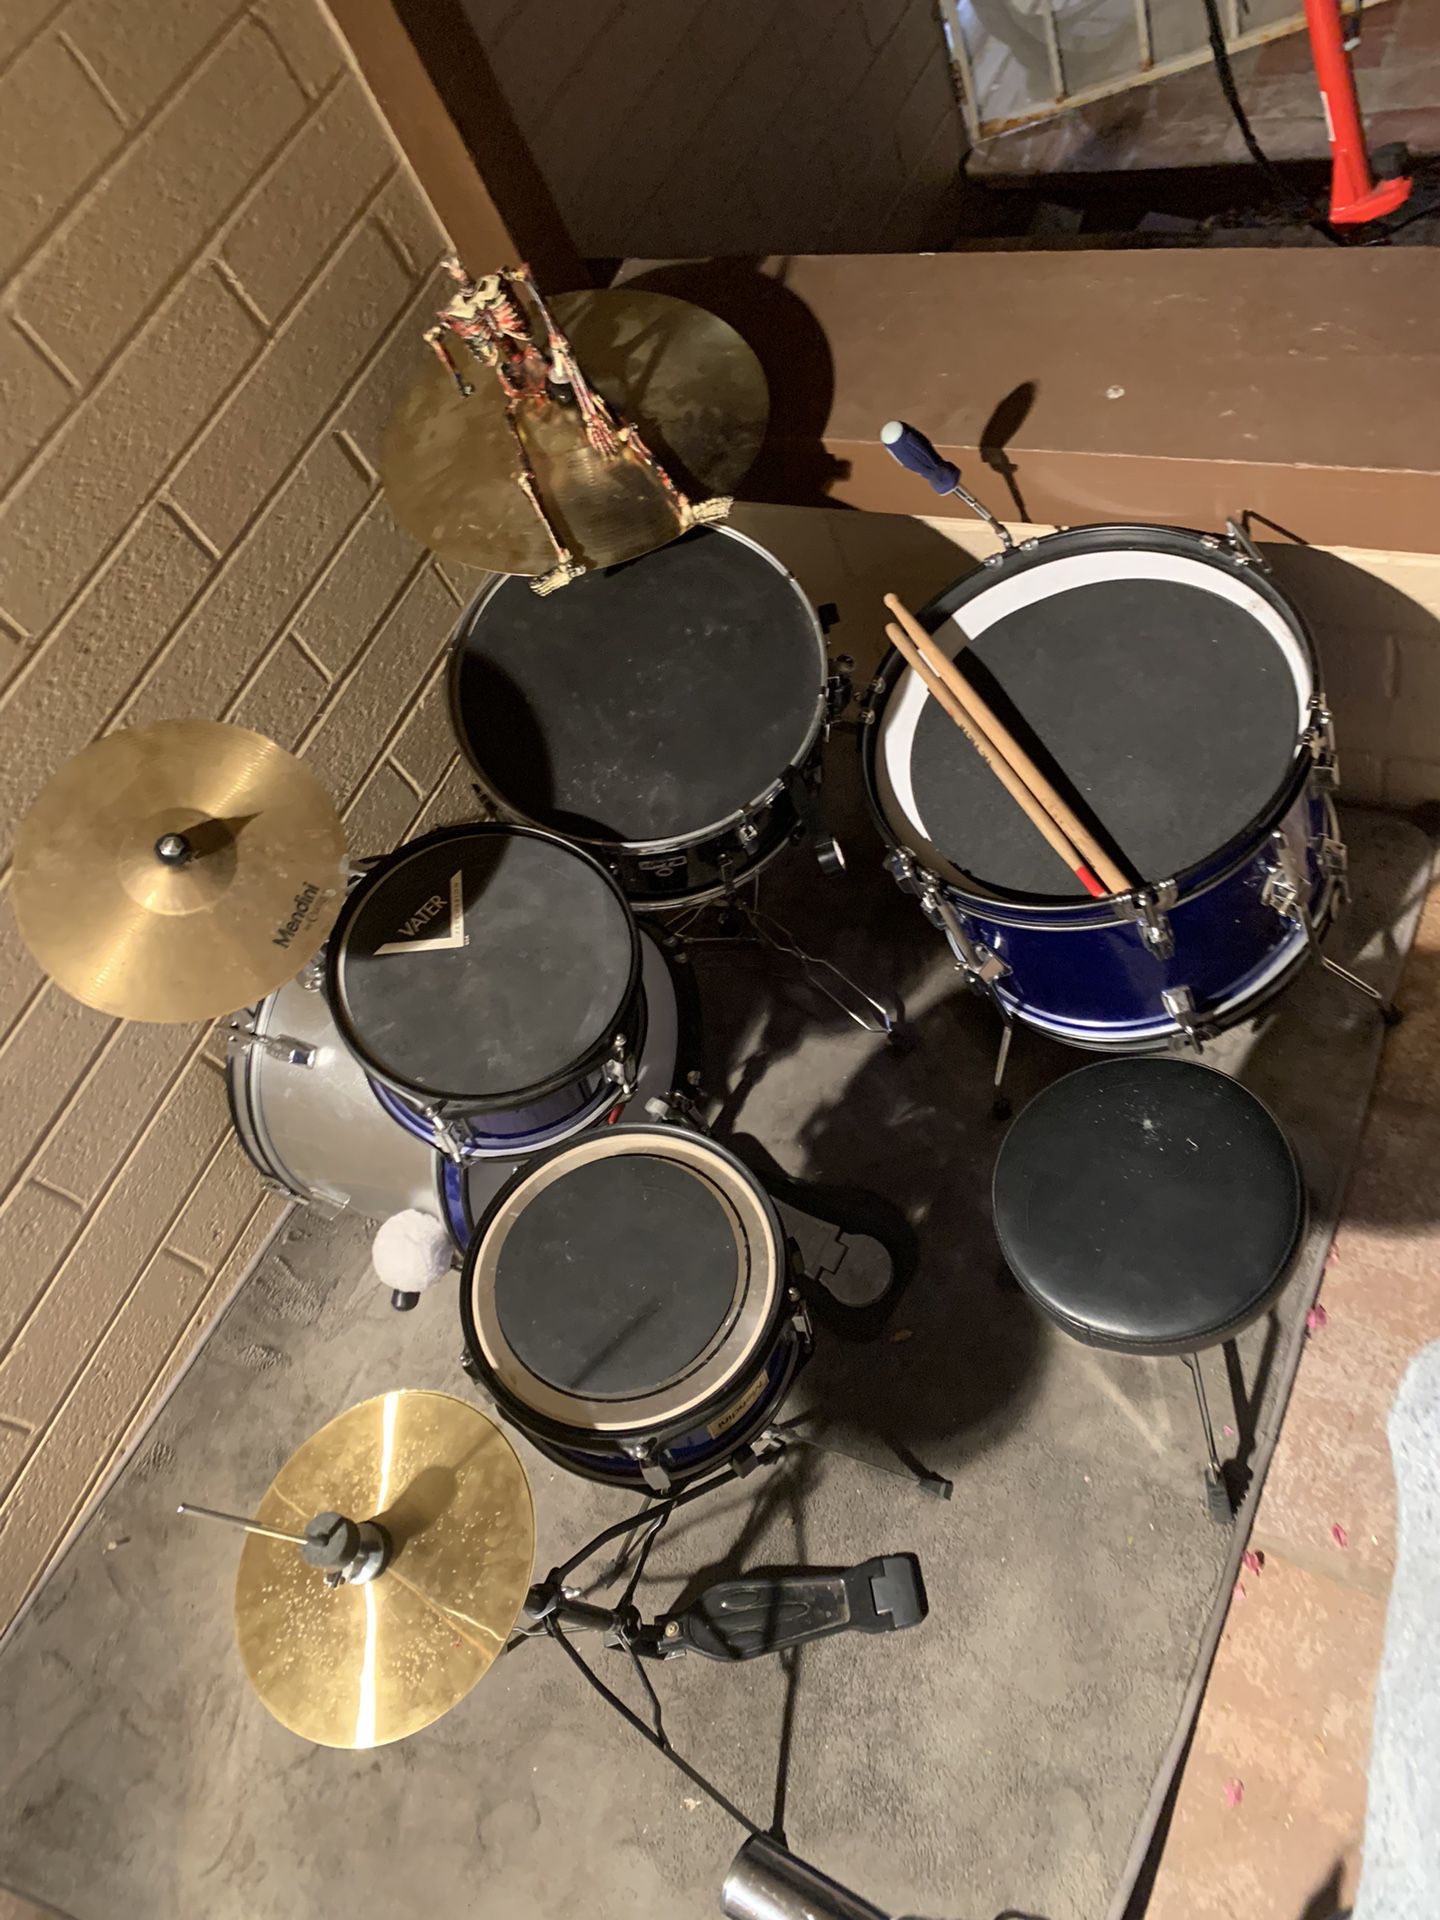 Mendini Jr Pro Beginner Drum Kit  $200 Or Trade?